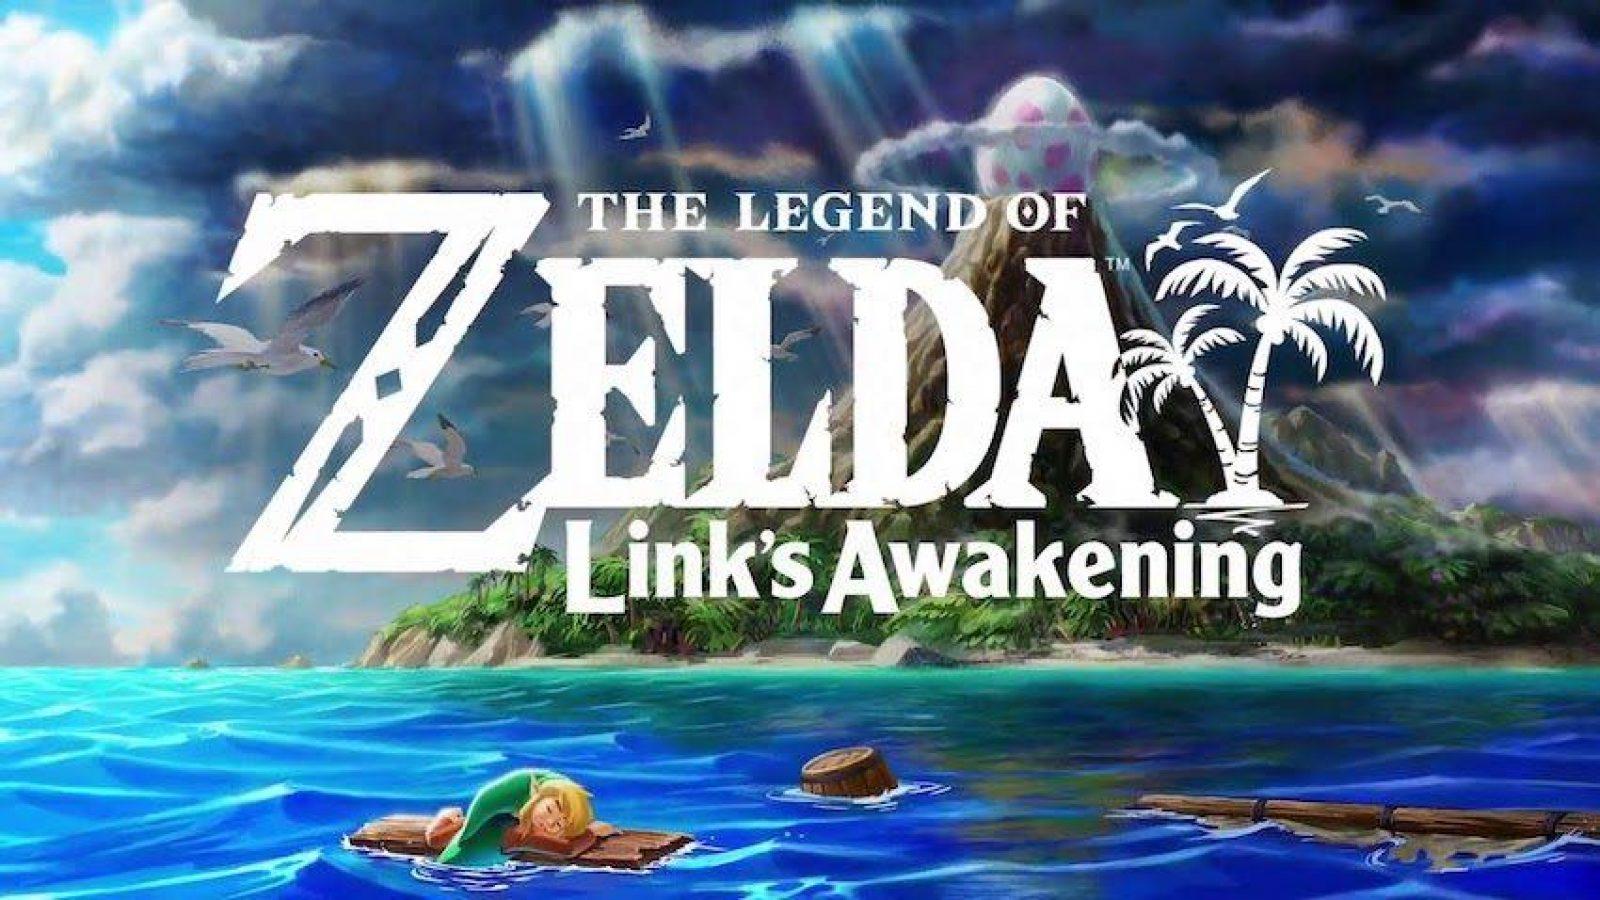 Let's Play: The Legend Of Zelda - Link's Awakening - Thumbnails